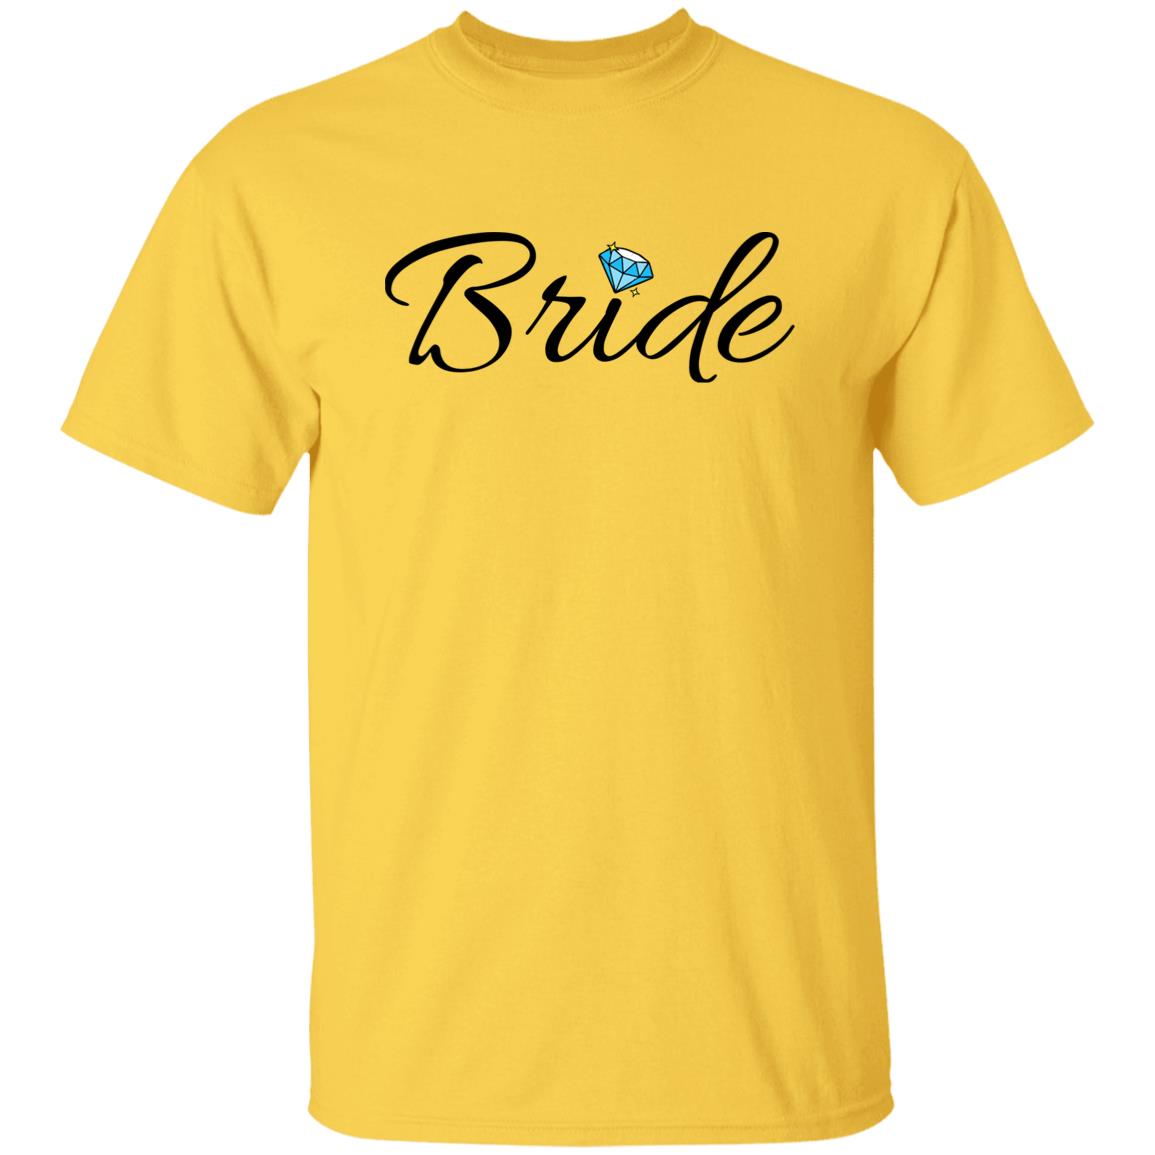 Bride (Black Print) G500 5.3 oz. T-Shirt